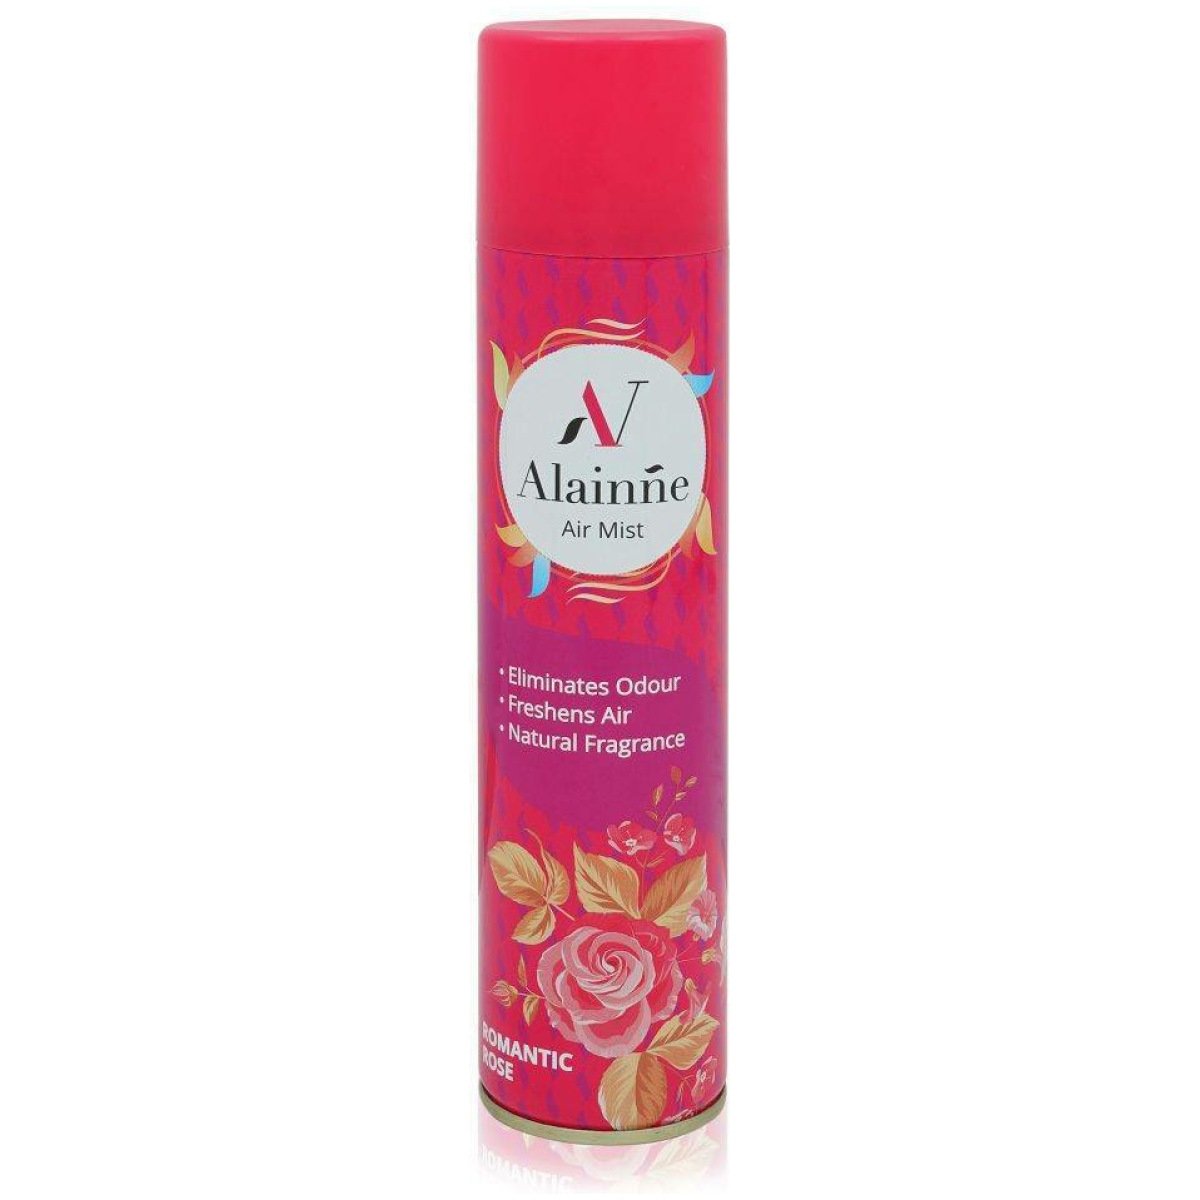 Alainne Air Mist Romantic Rose Air Freshner Spray 278ml